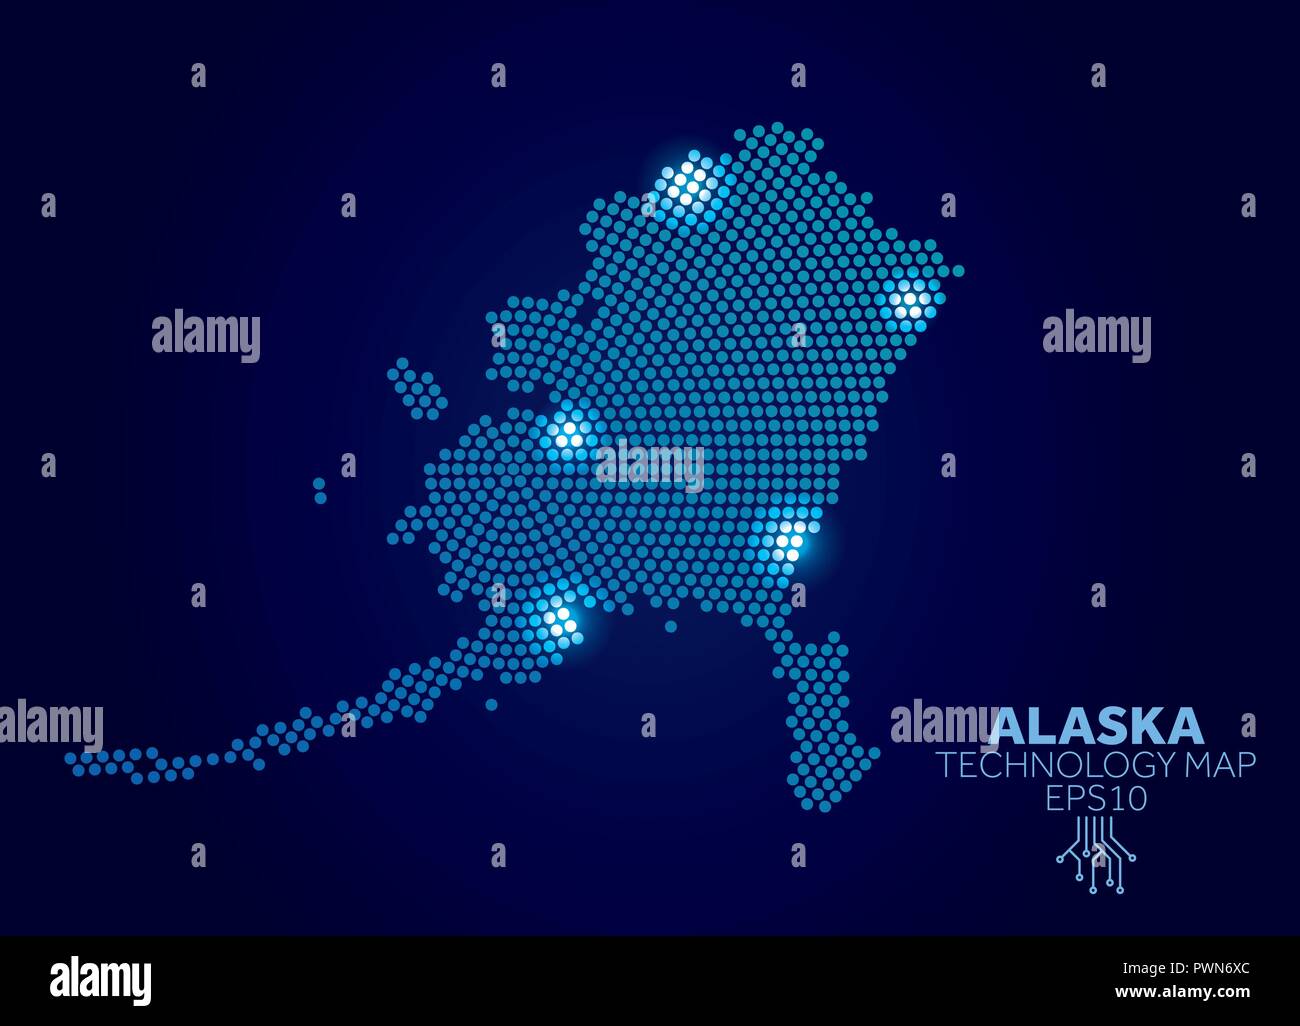 Alaska dotted technology map. Modern data communication concept Stock Vector